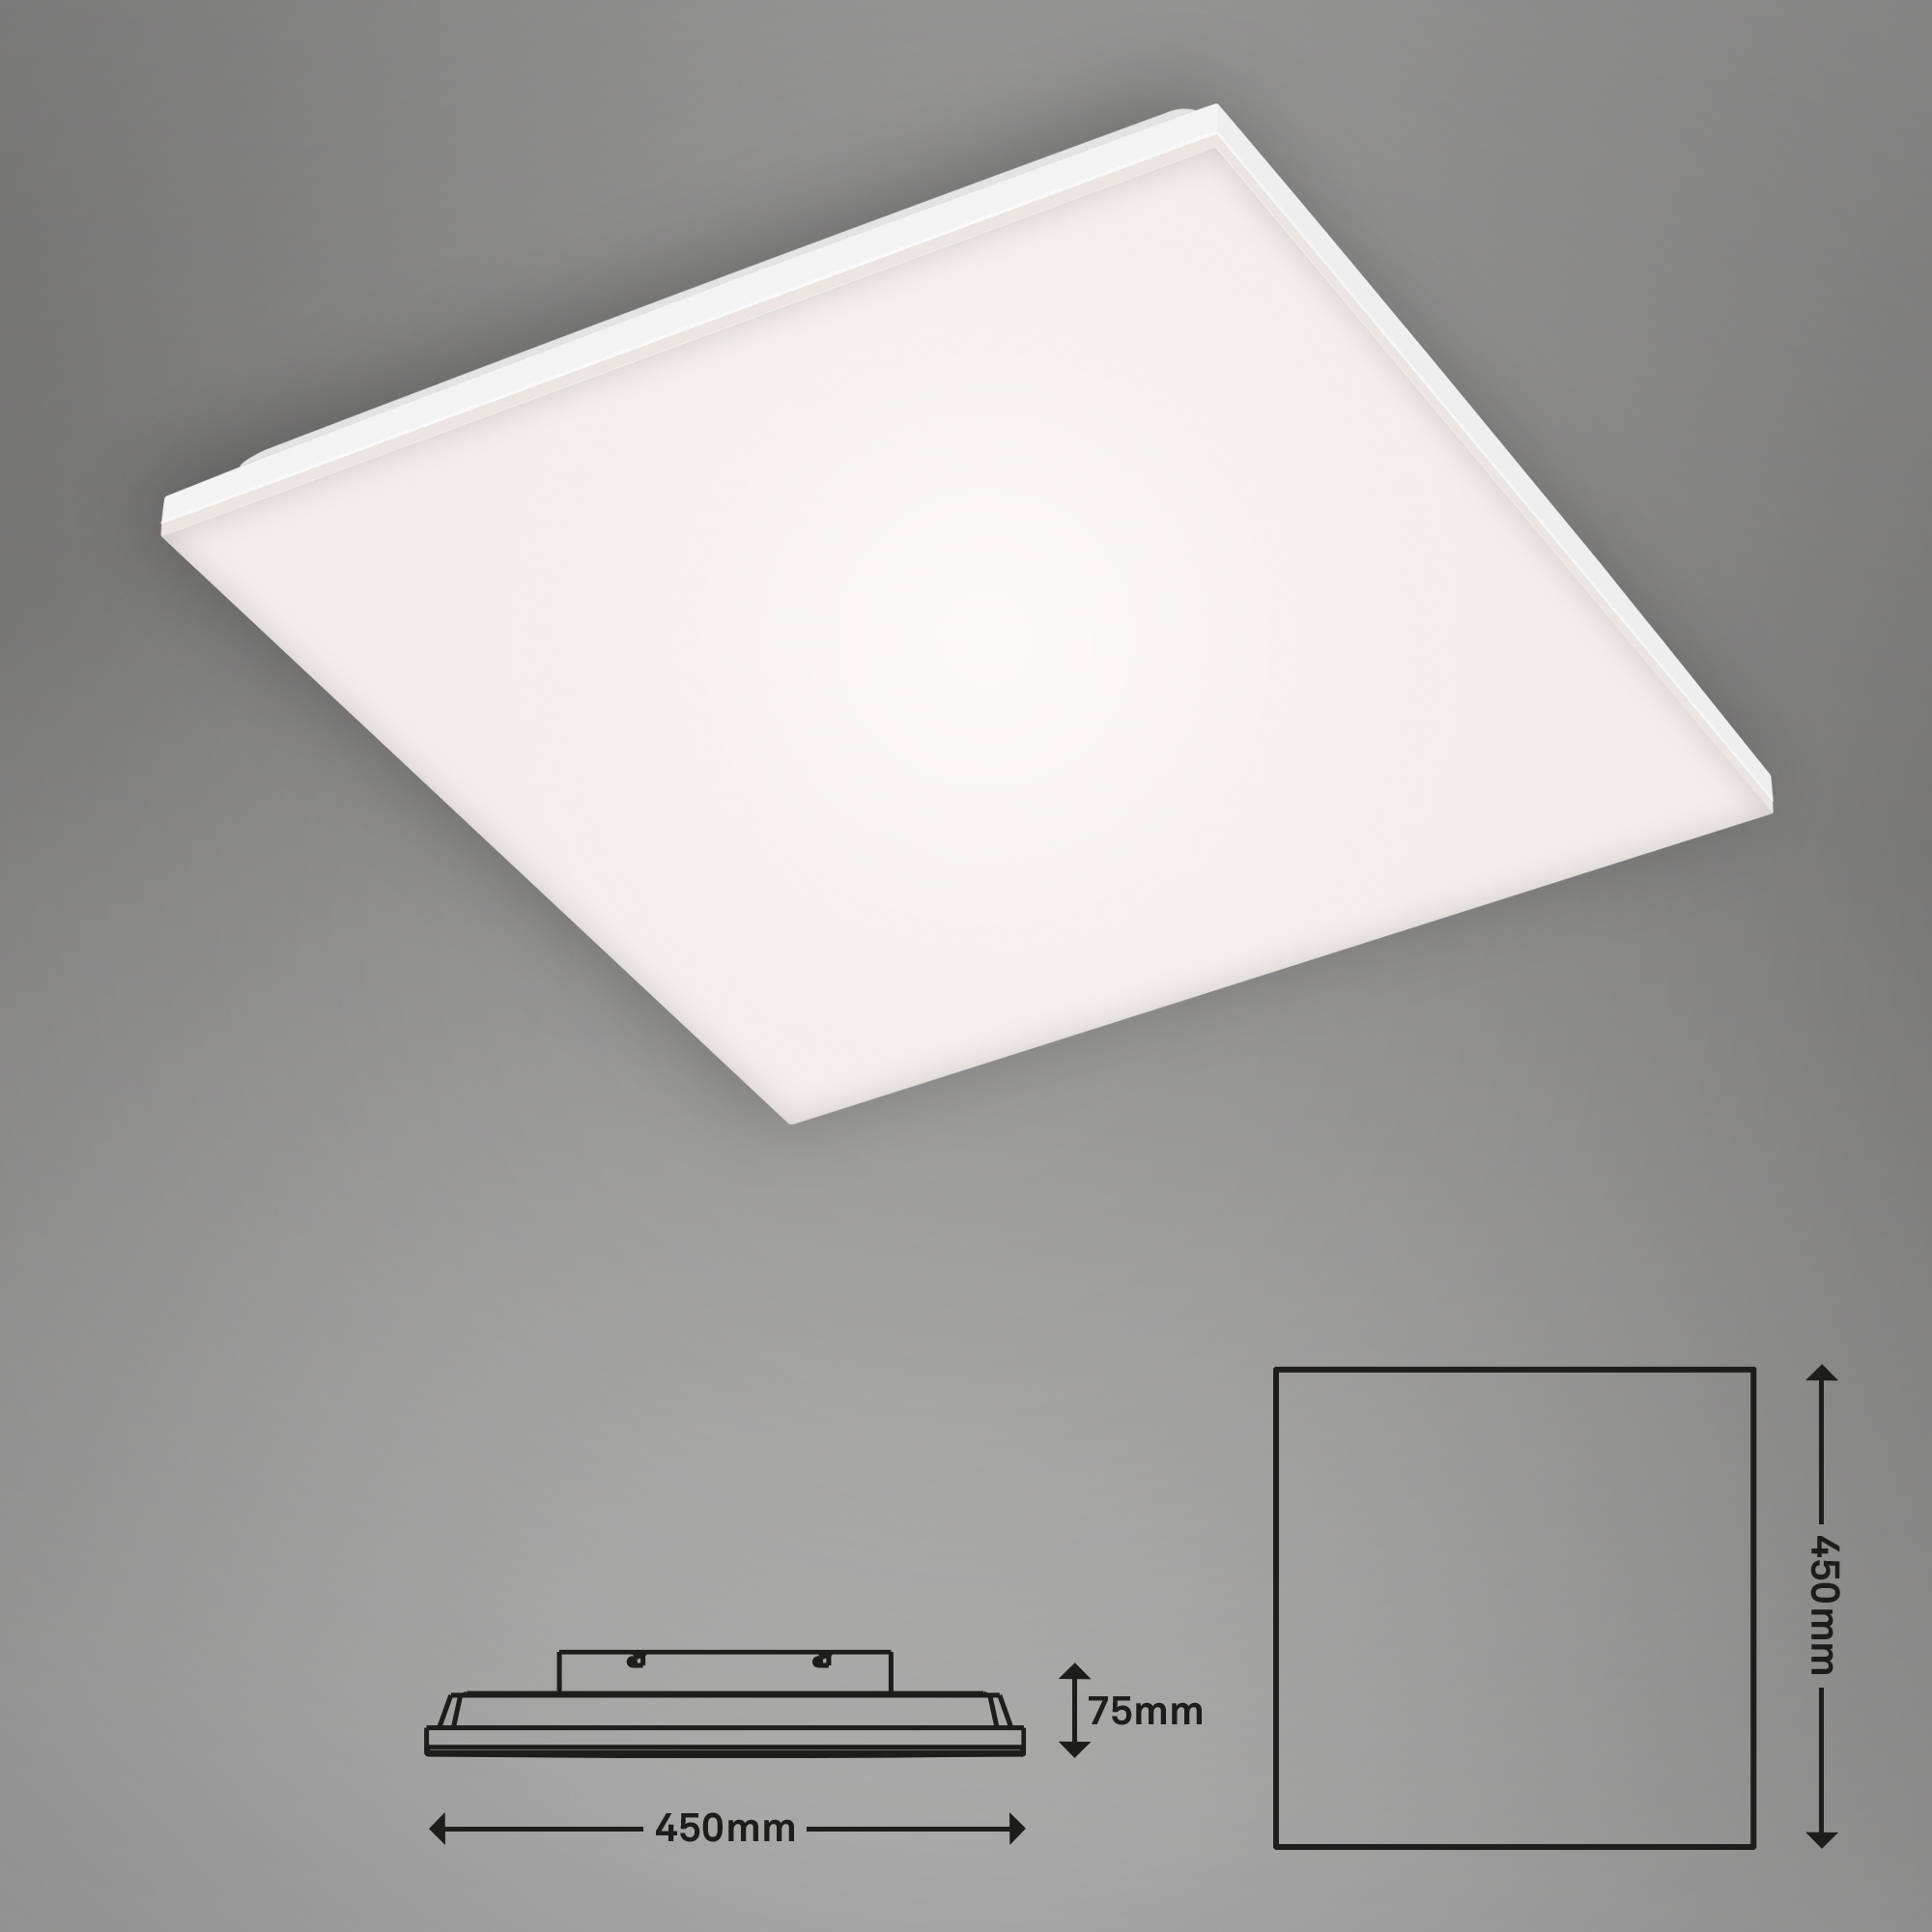 Briloner Panel Frameless, weiß, 45x45cm